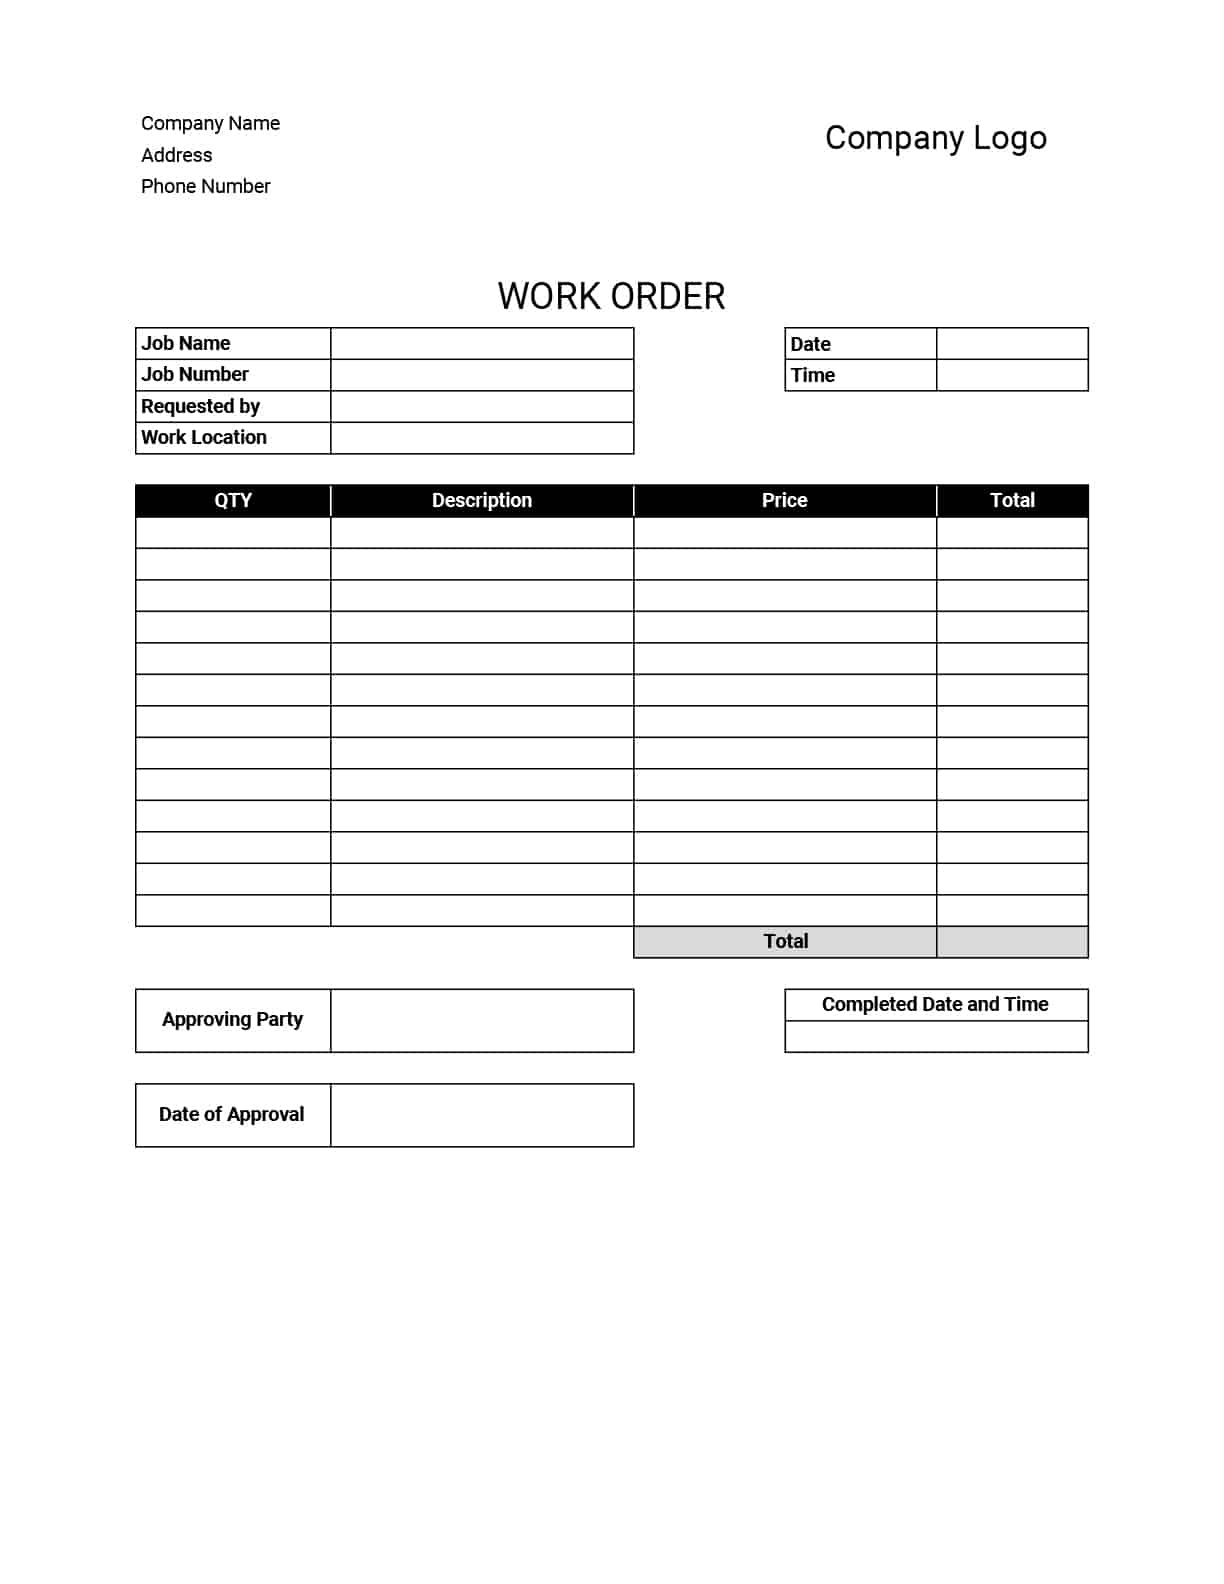 work-order-form-template-download-printable-pdf